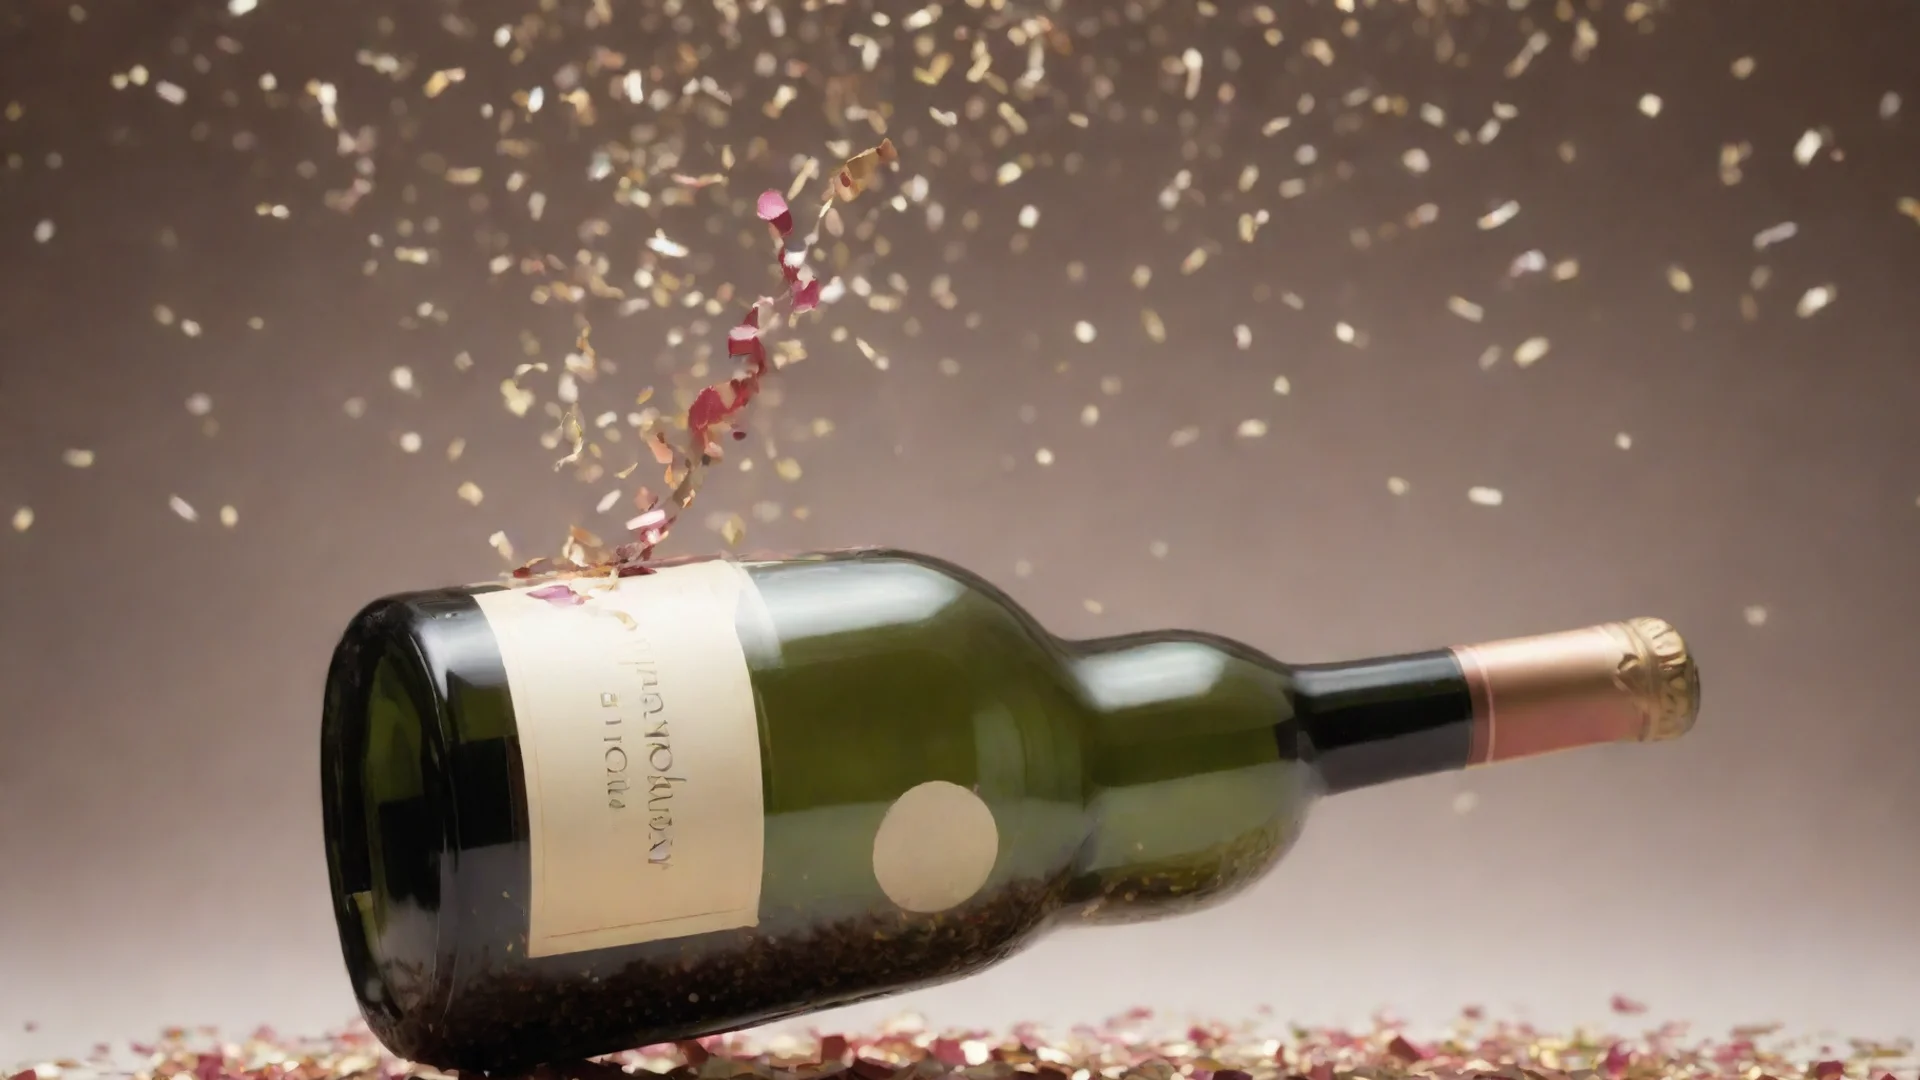 wine bottle pop confetti champaigne celebration wonderful detailed asthetic wide